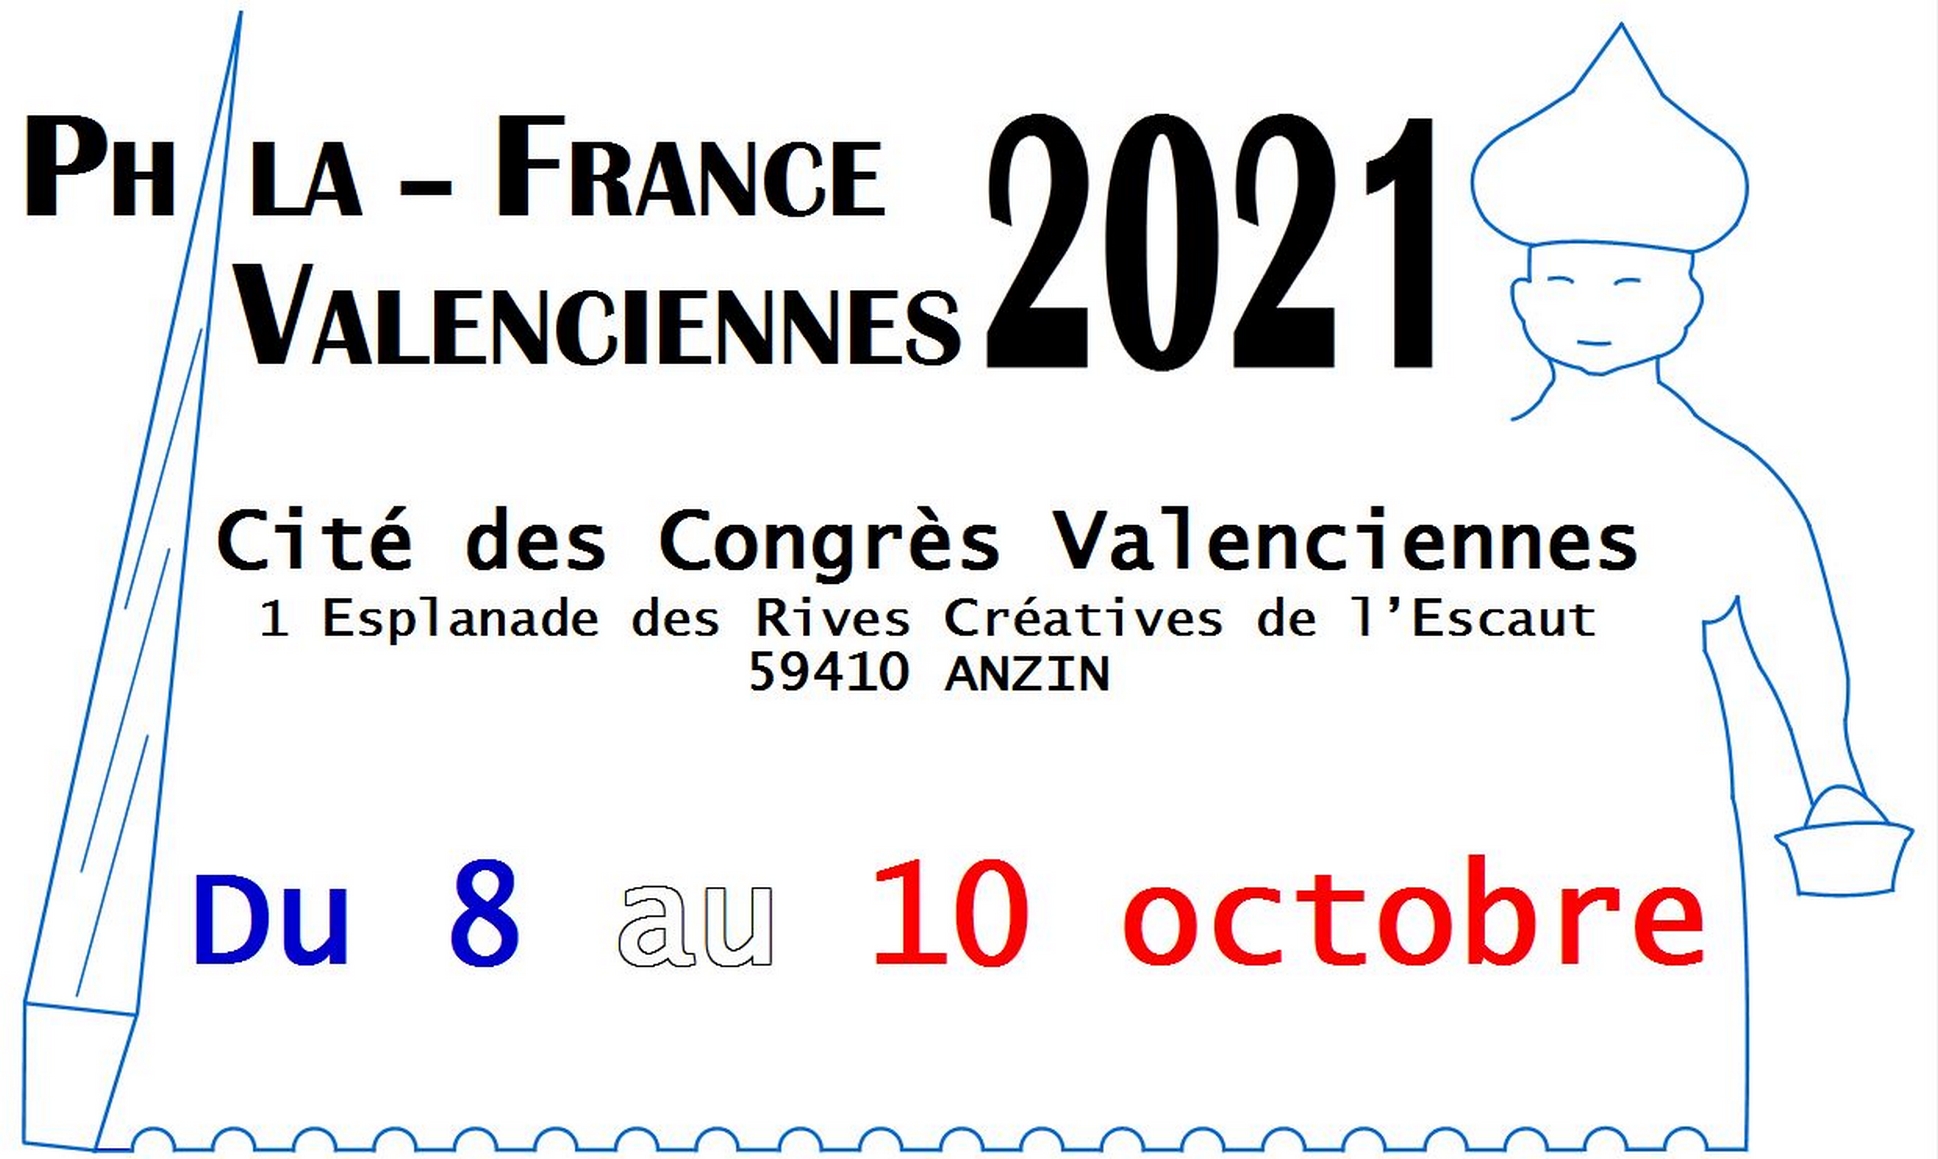 Valenciennes Phila France 2021